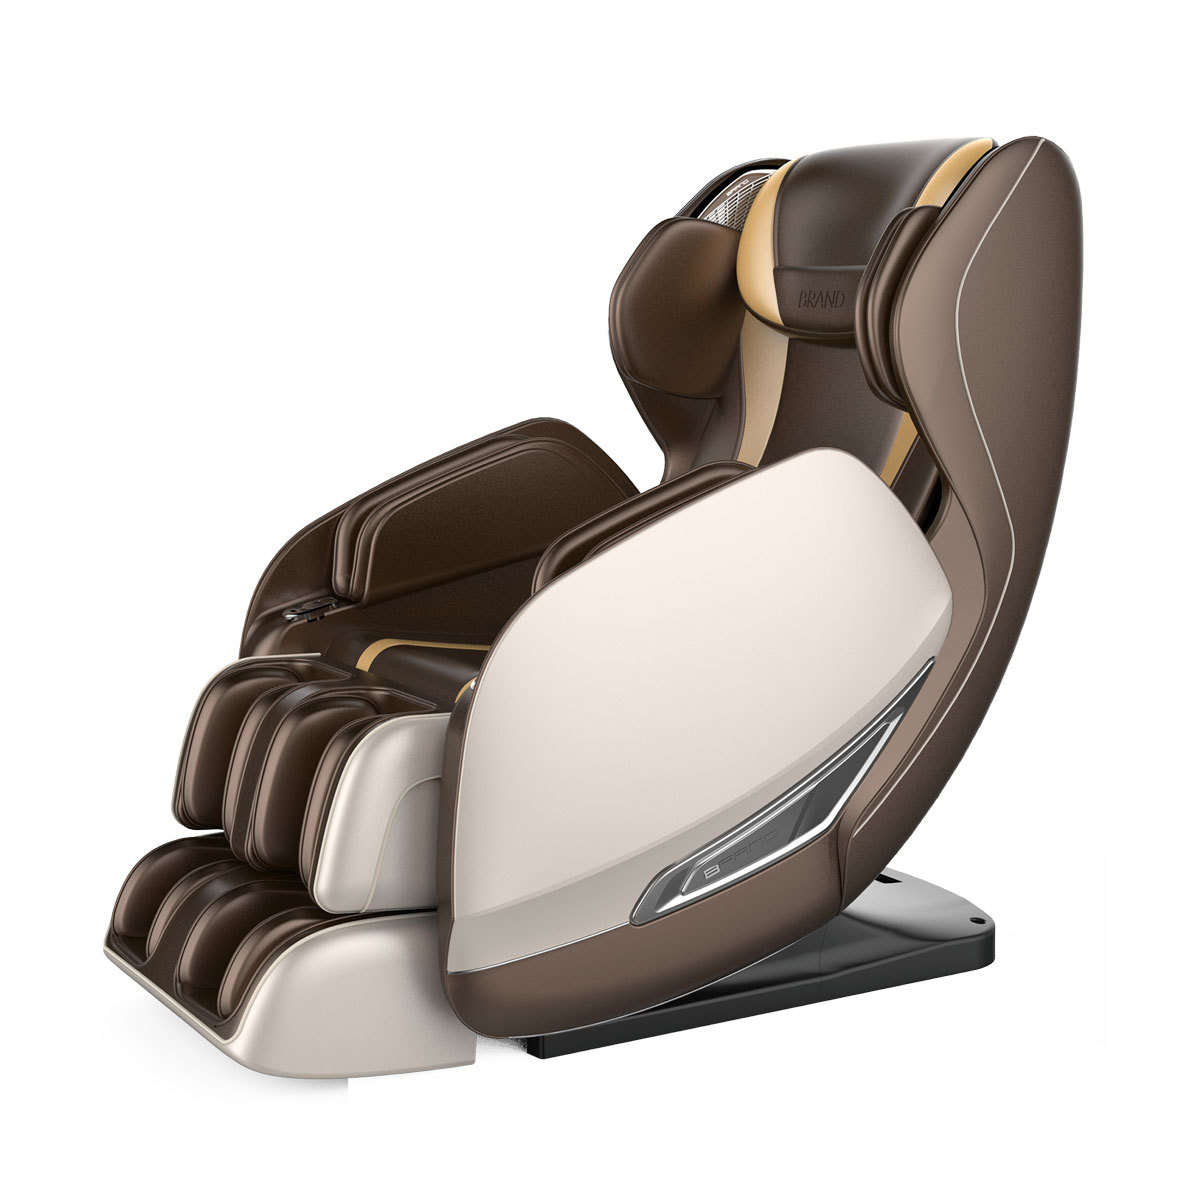 Mini massage chair MC-716